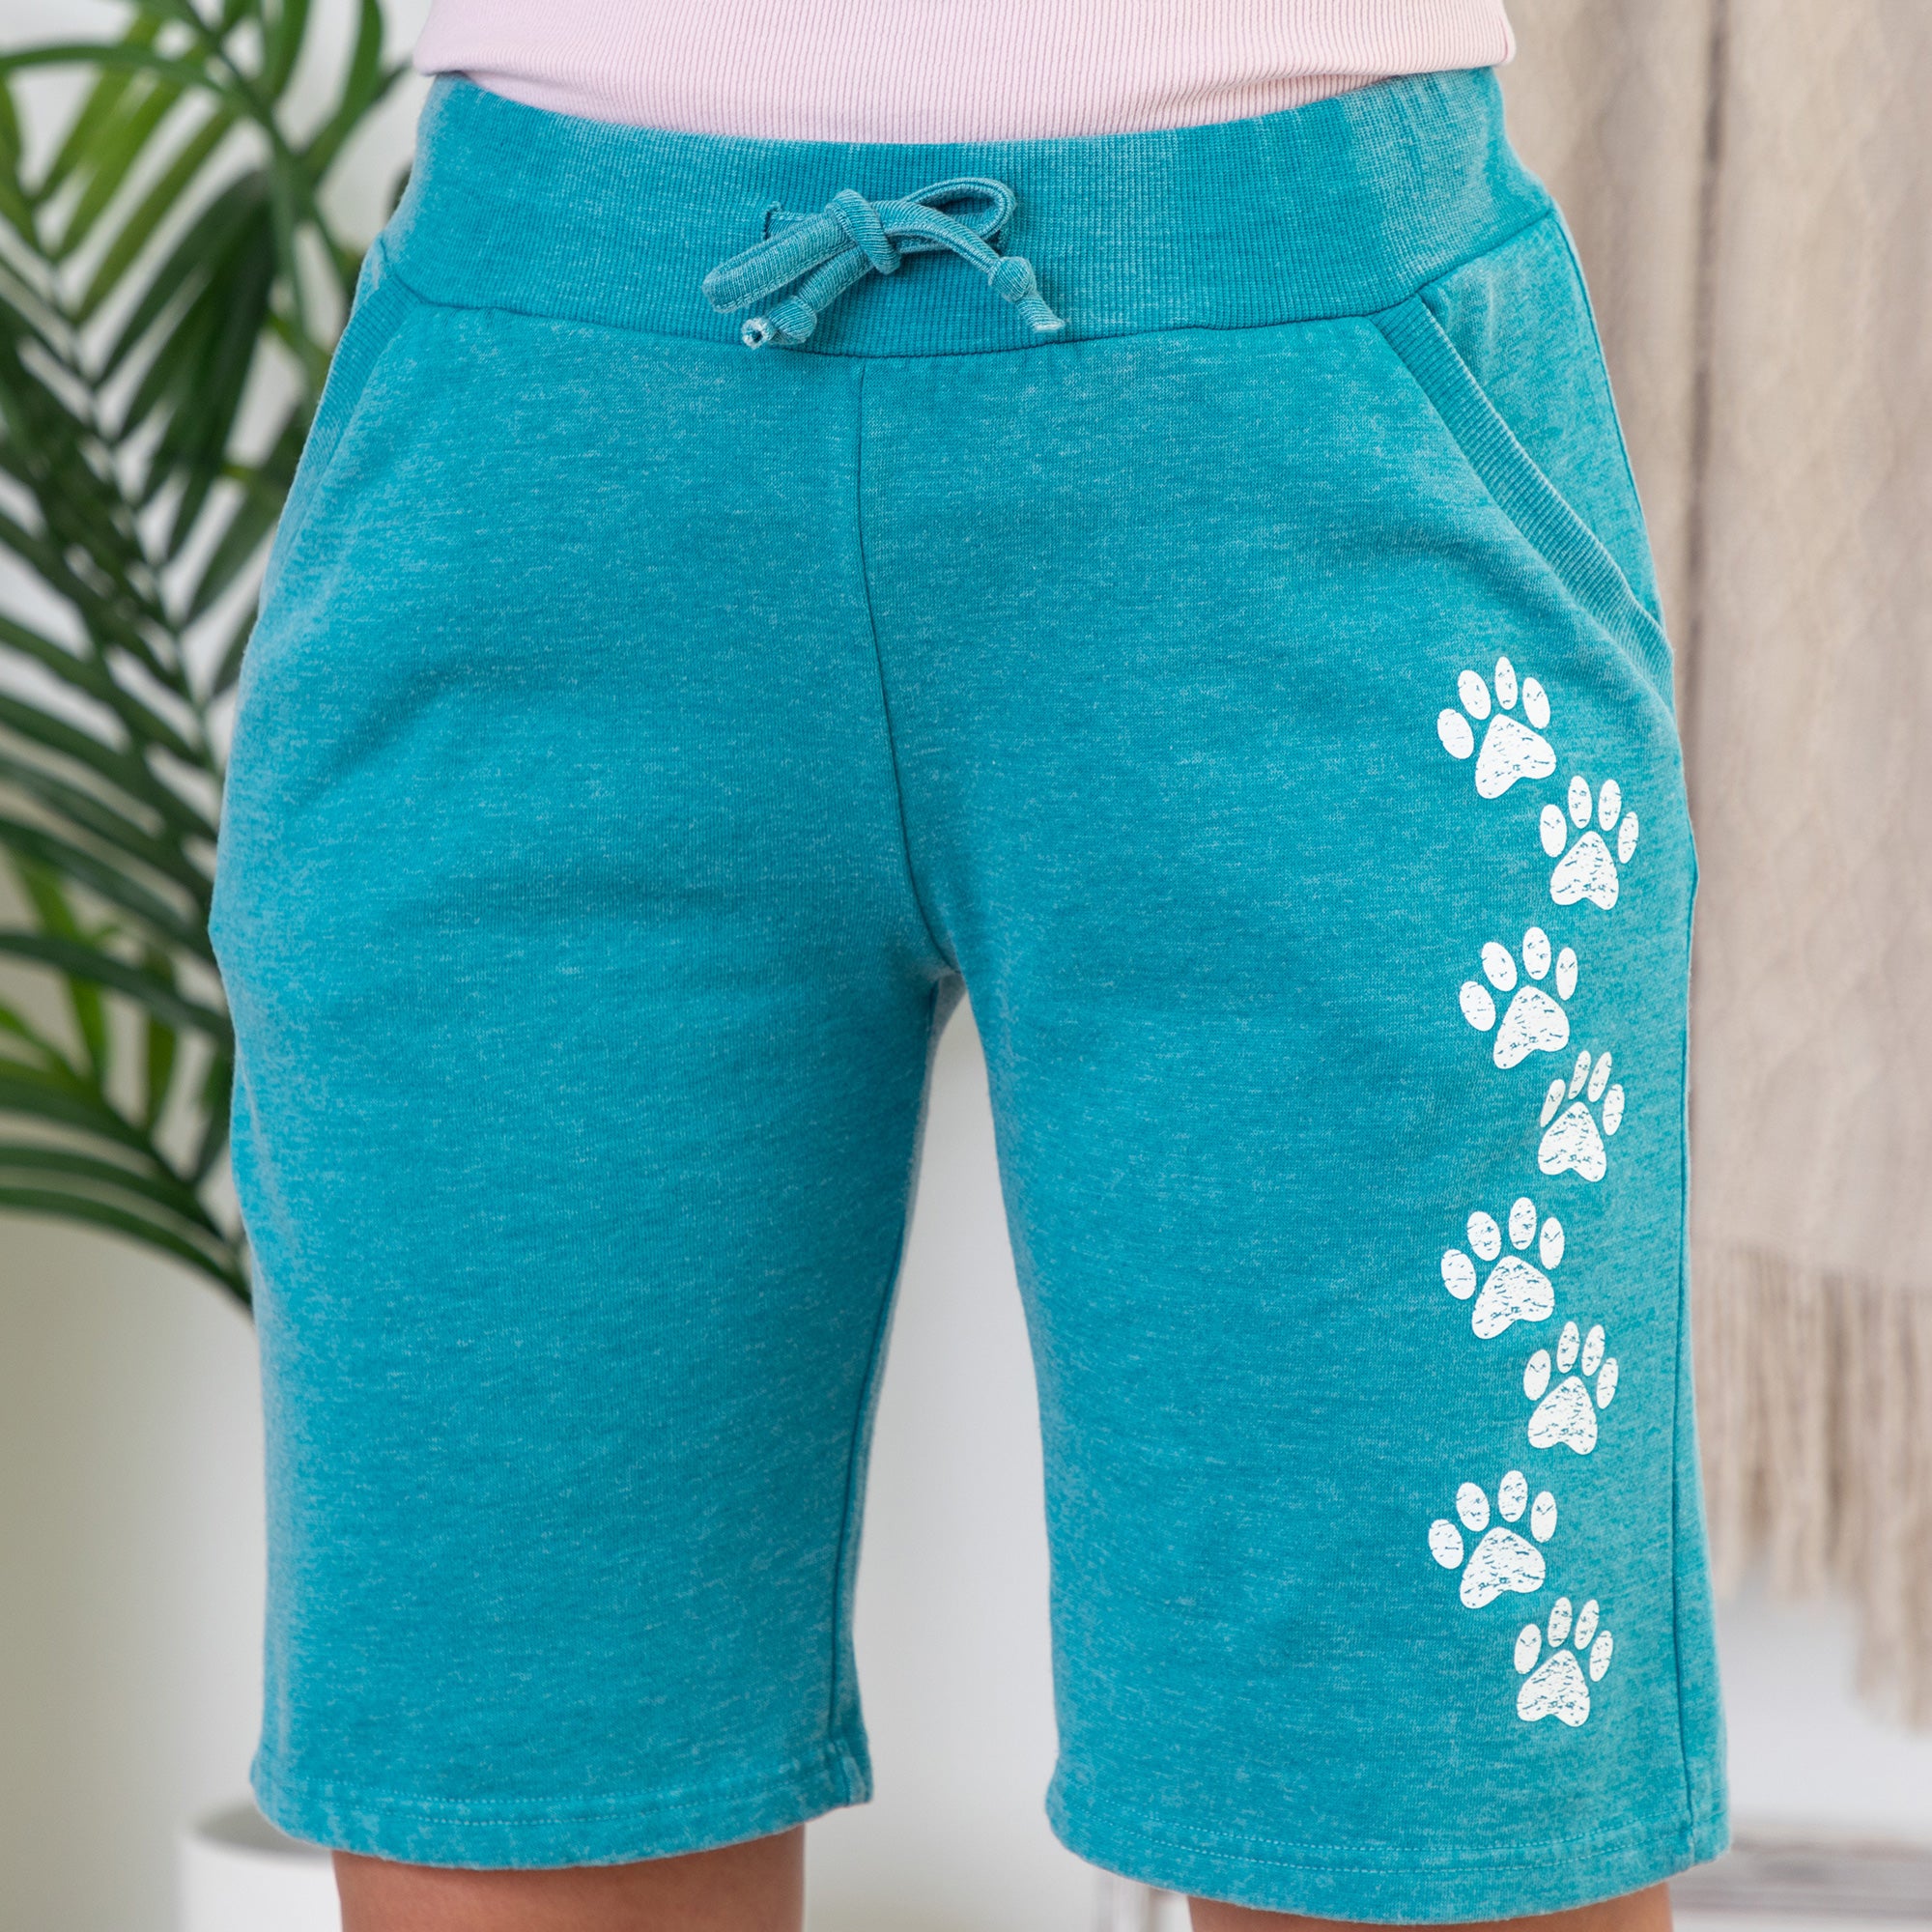 Walking Paws Burnout Board Shorts - Turquoise - S